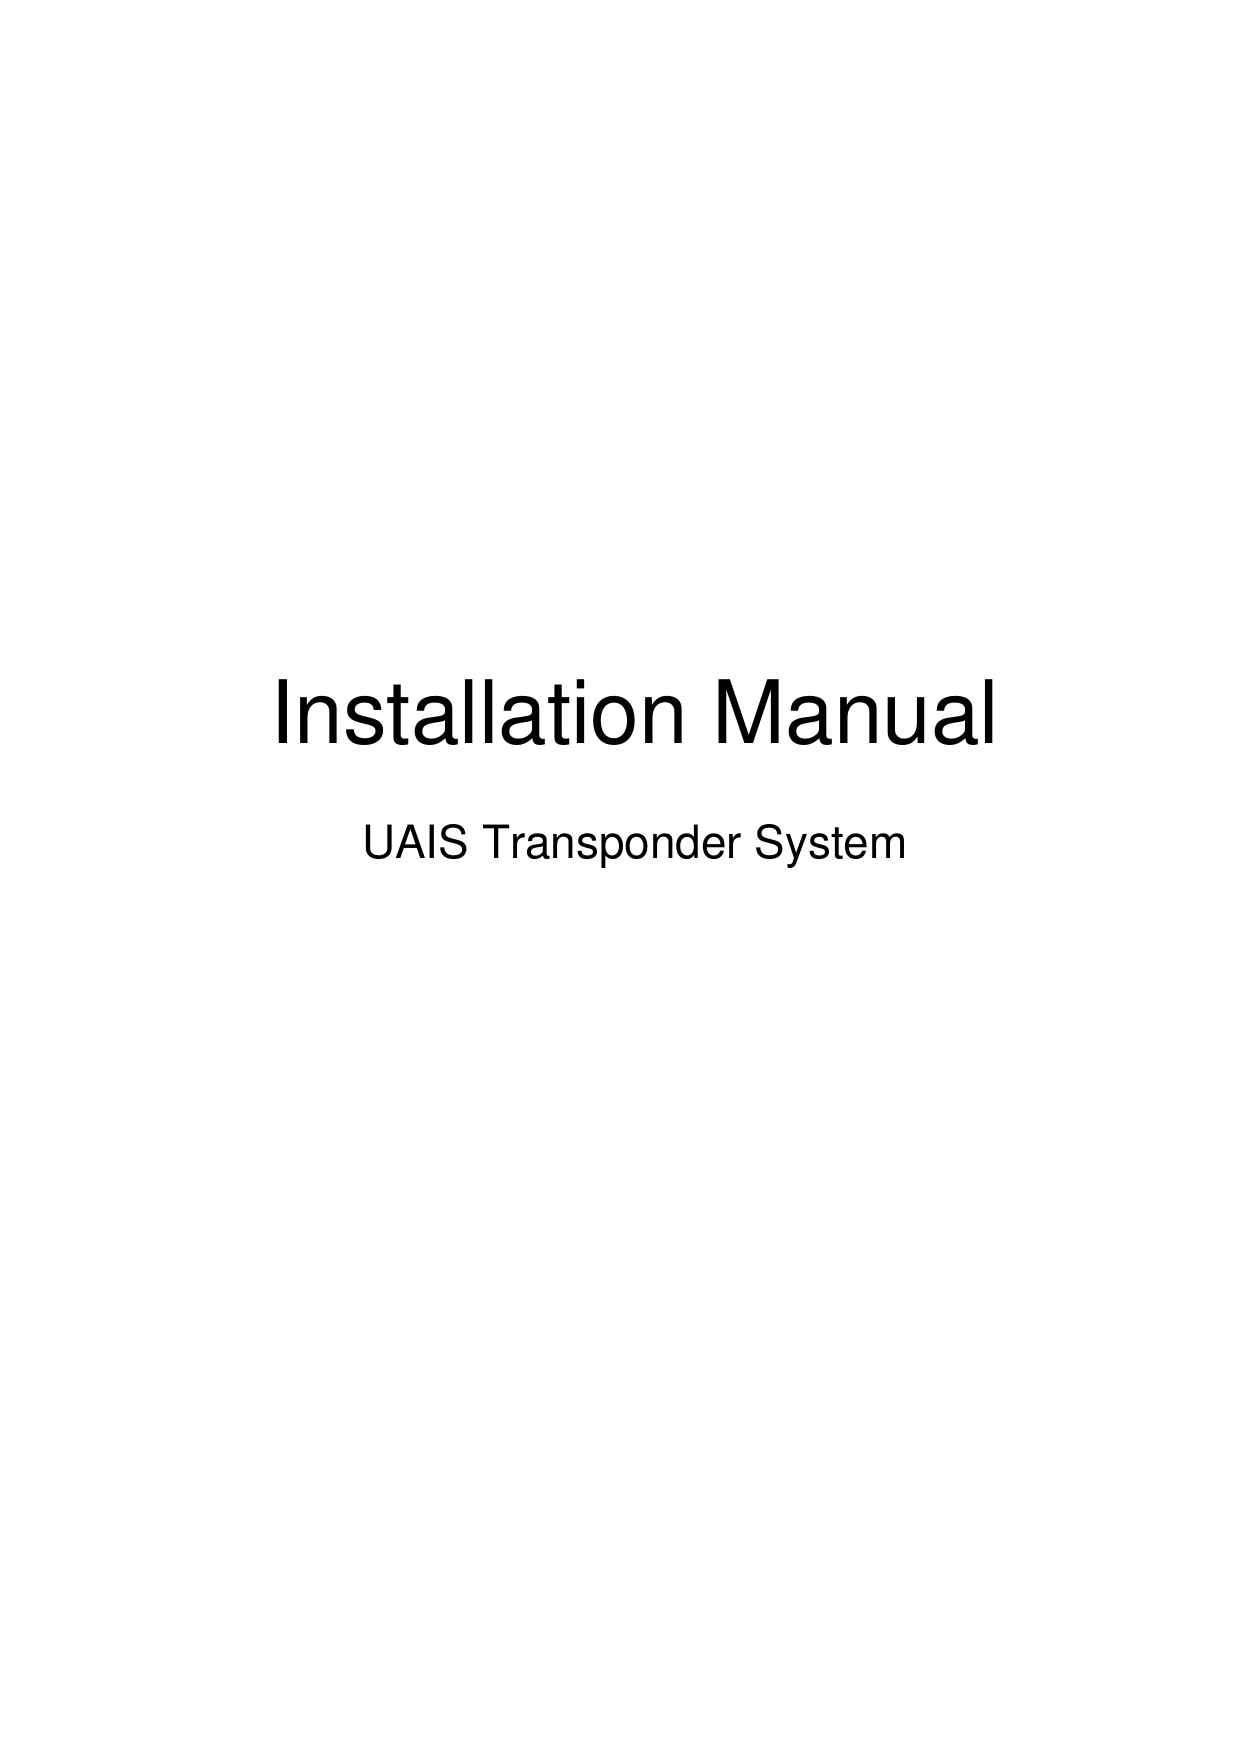 Installation ManualUAIS Transponder System